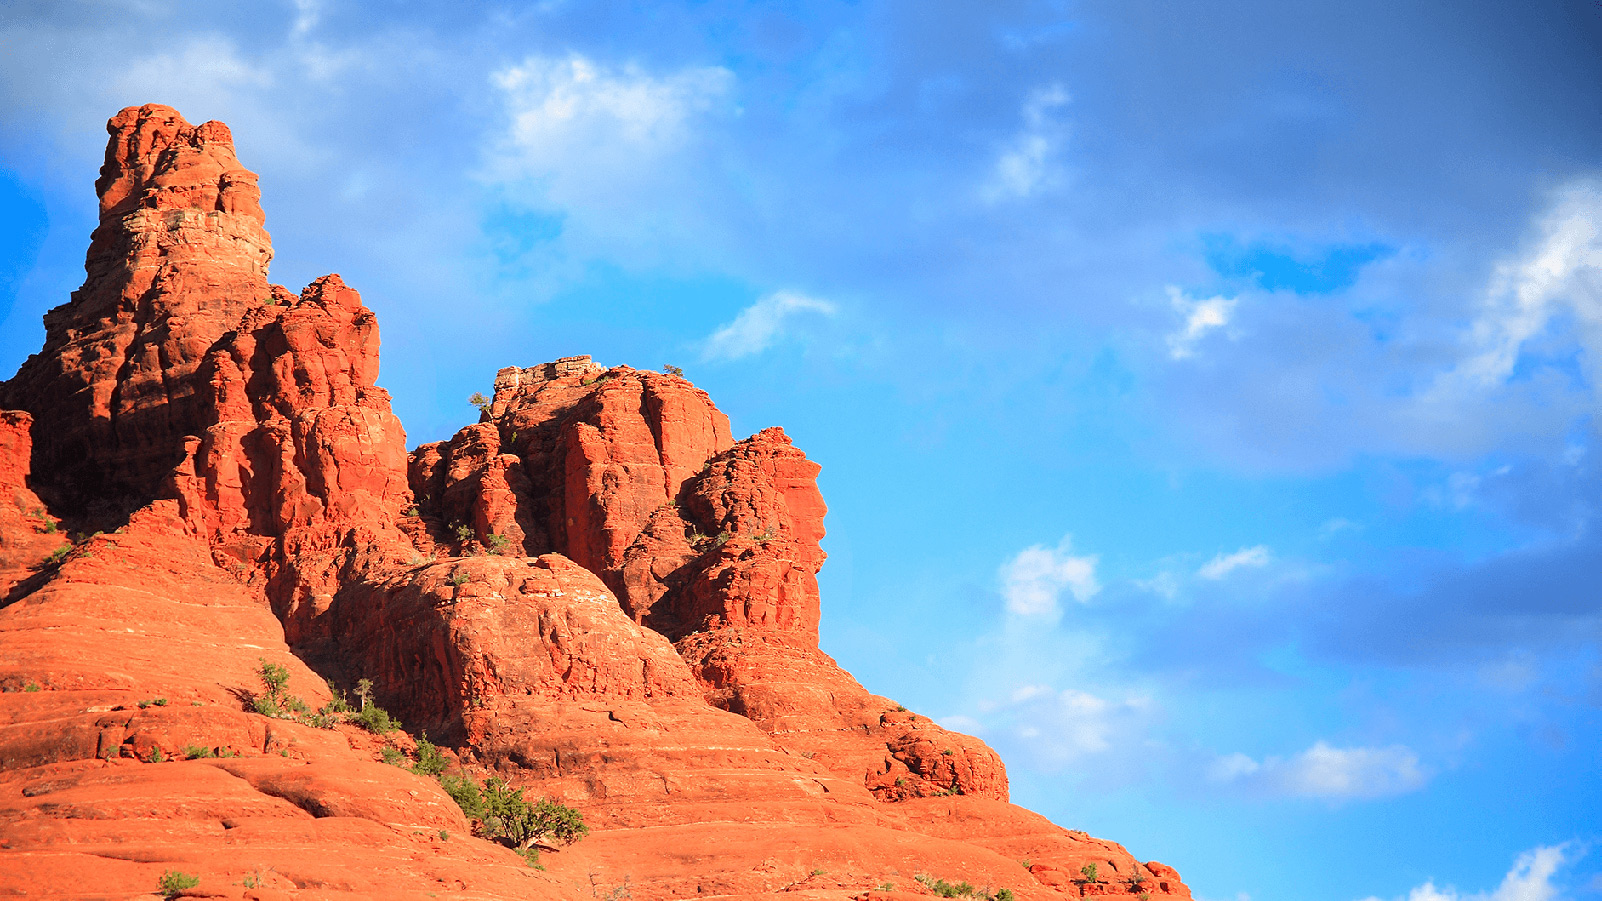 Arizona red rocks on a sunny day with blue sky.